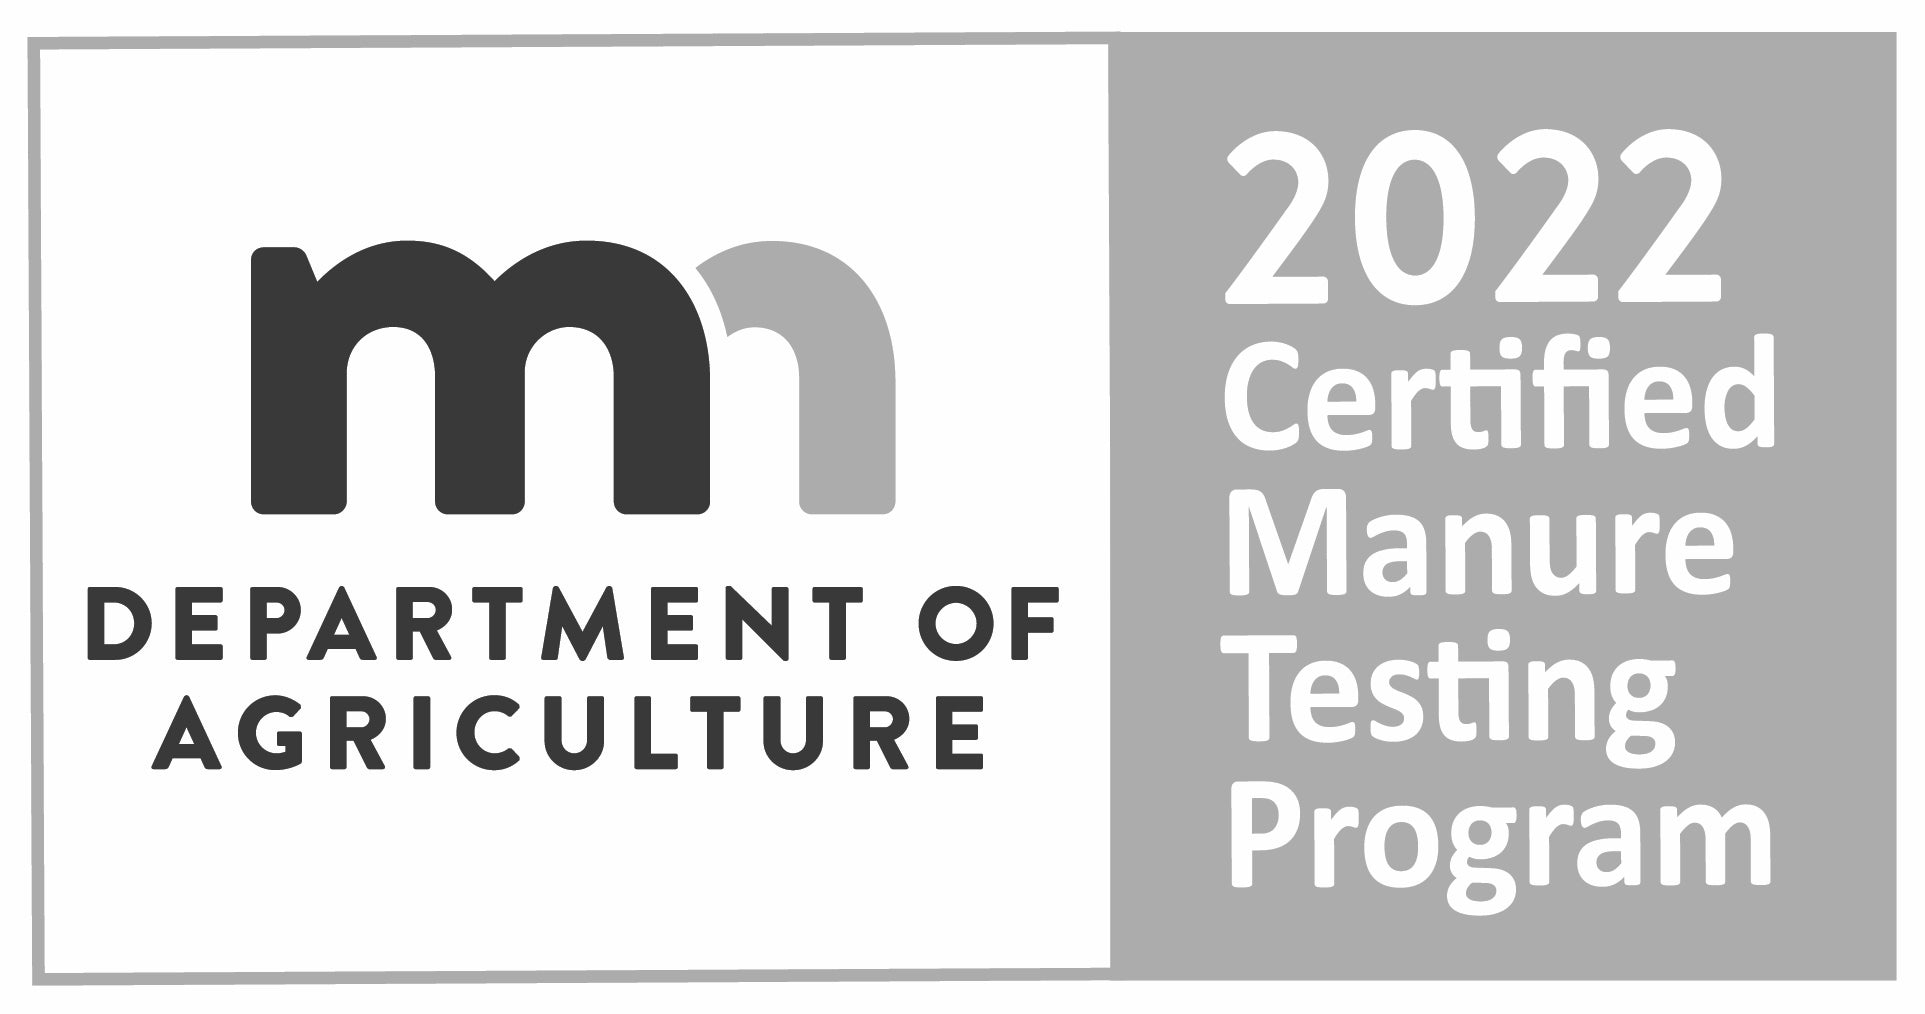 Minnesota Certified Manure Testing Program 2022